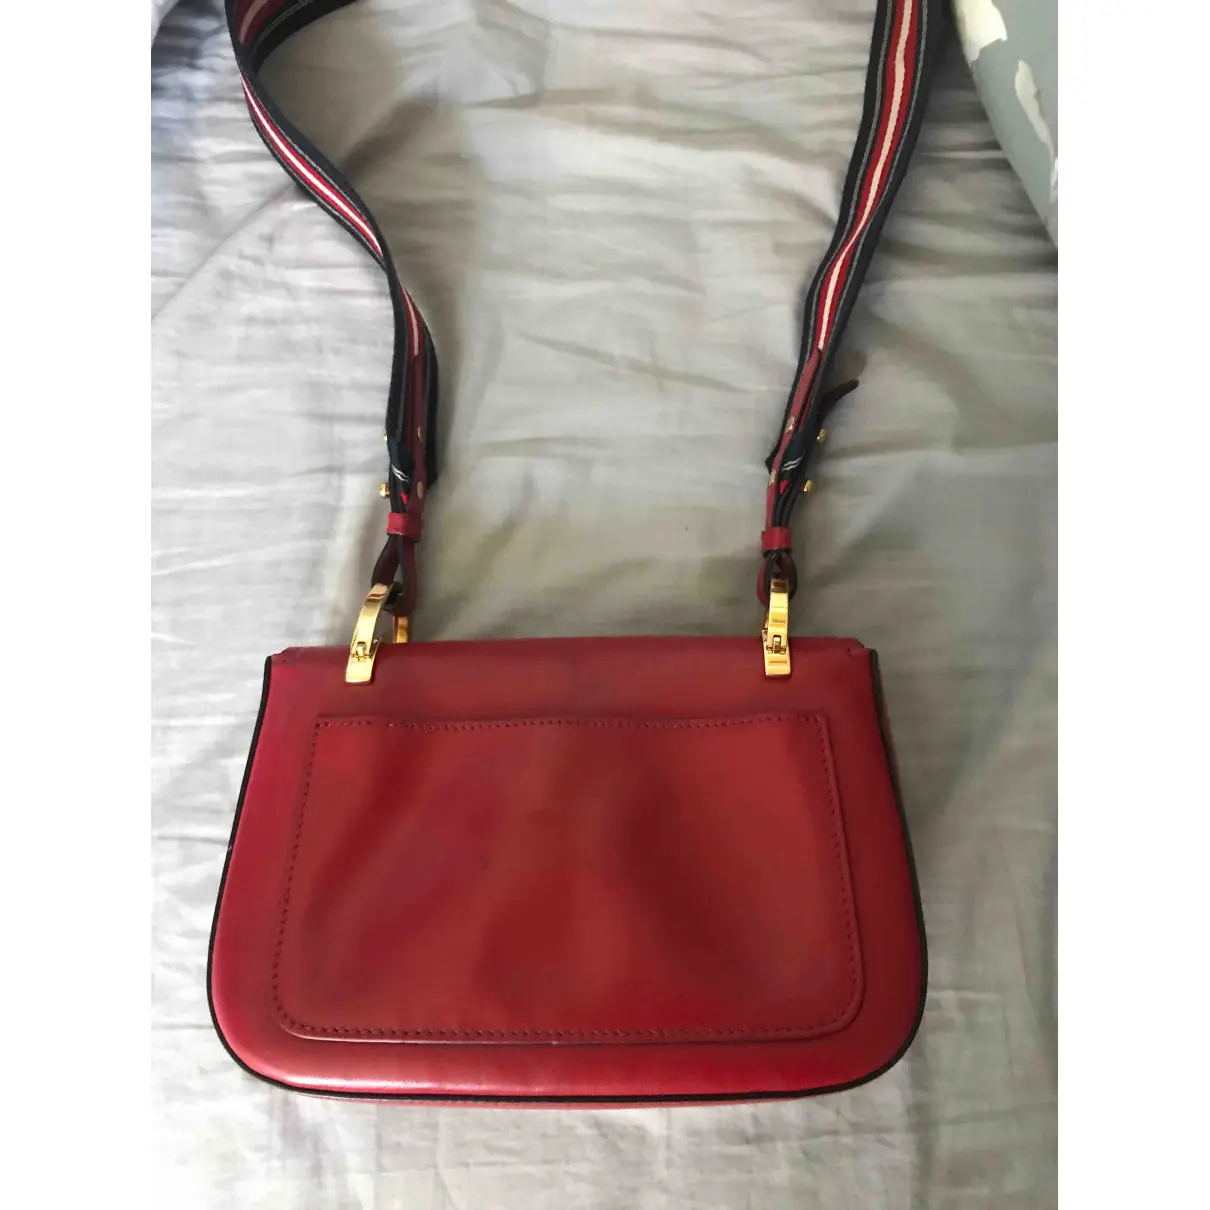 Buy Prada Pionnière leather crossbody bag online